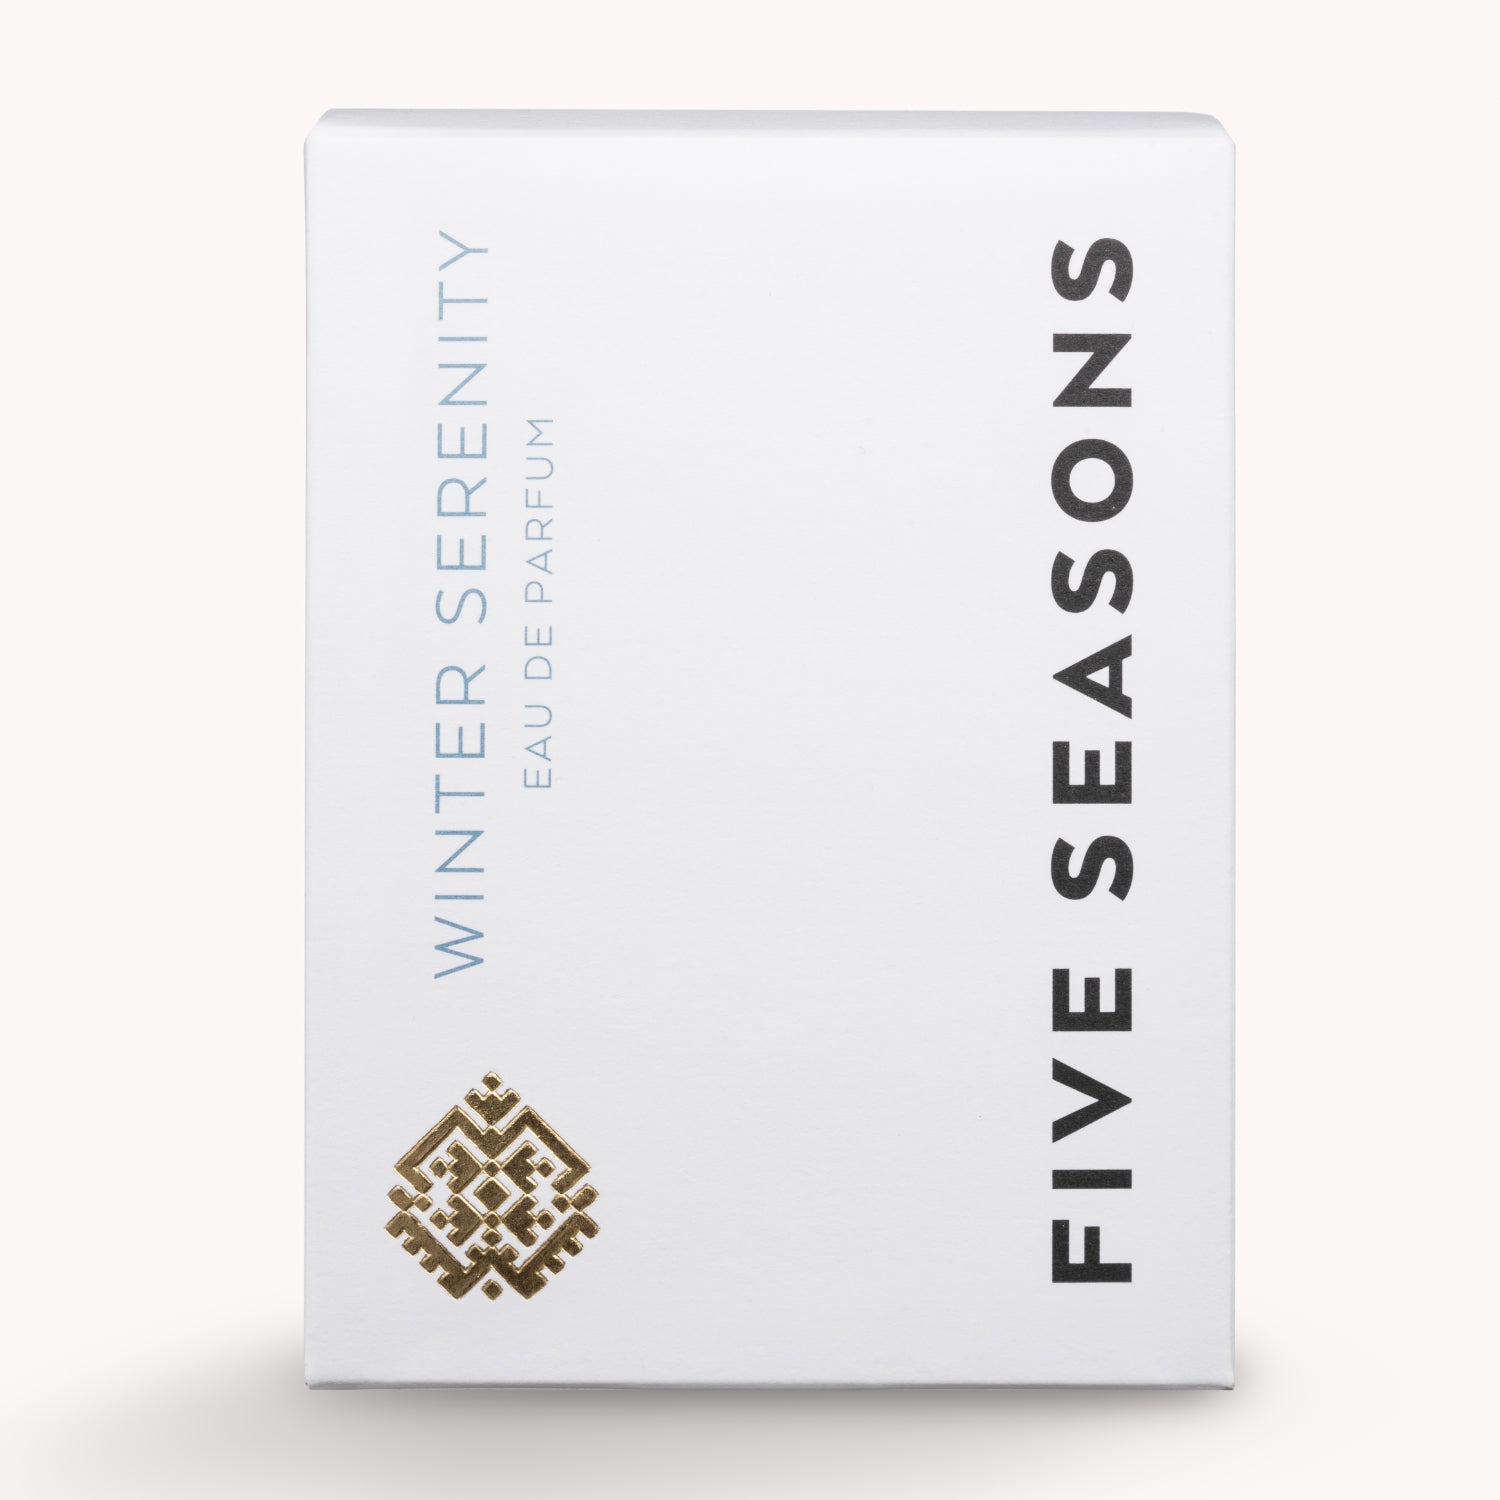 Winter Serenity Eau De Parfum 50ml - High-End Unisex Perfume for Men and Women